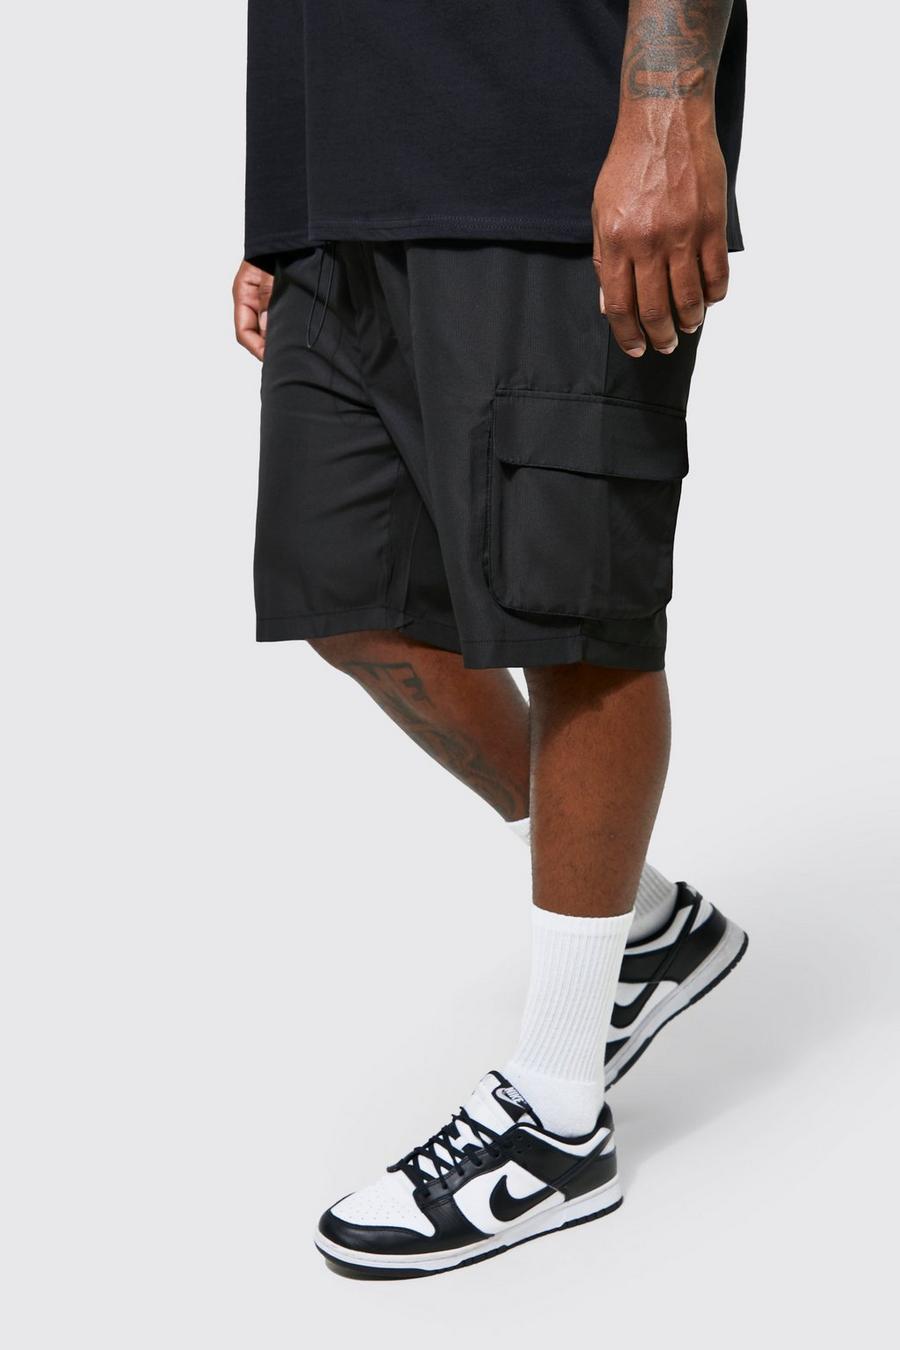 Pantaloncini medi Plus Size in nylon ripstop stile Cargo con tasche in rilievo, Black nero